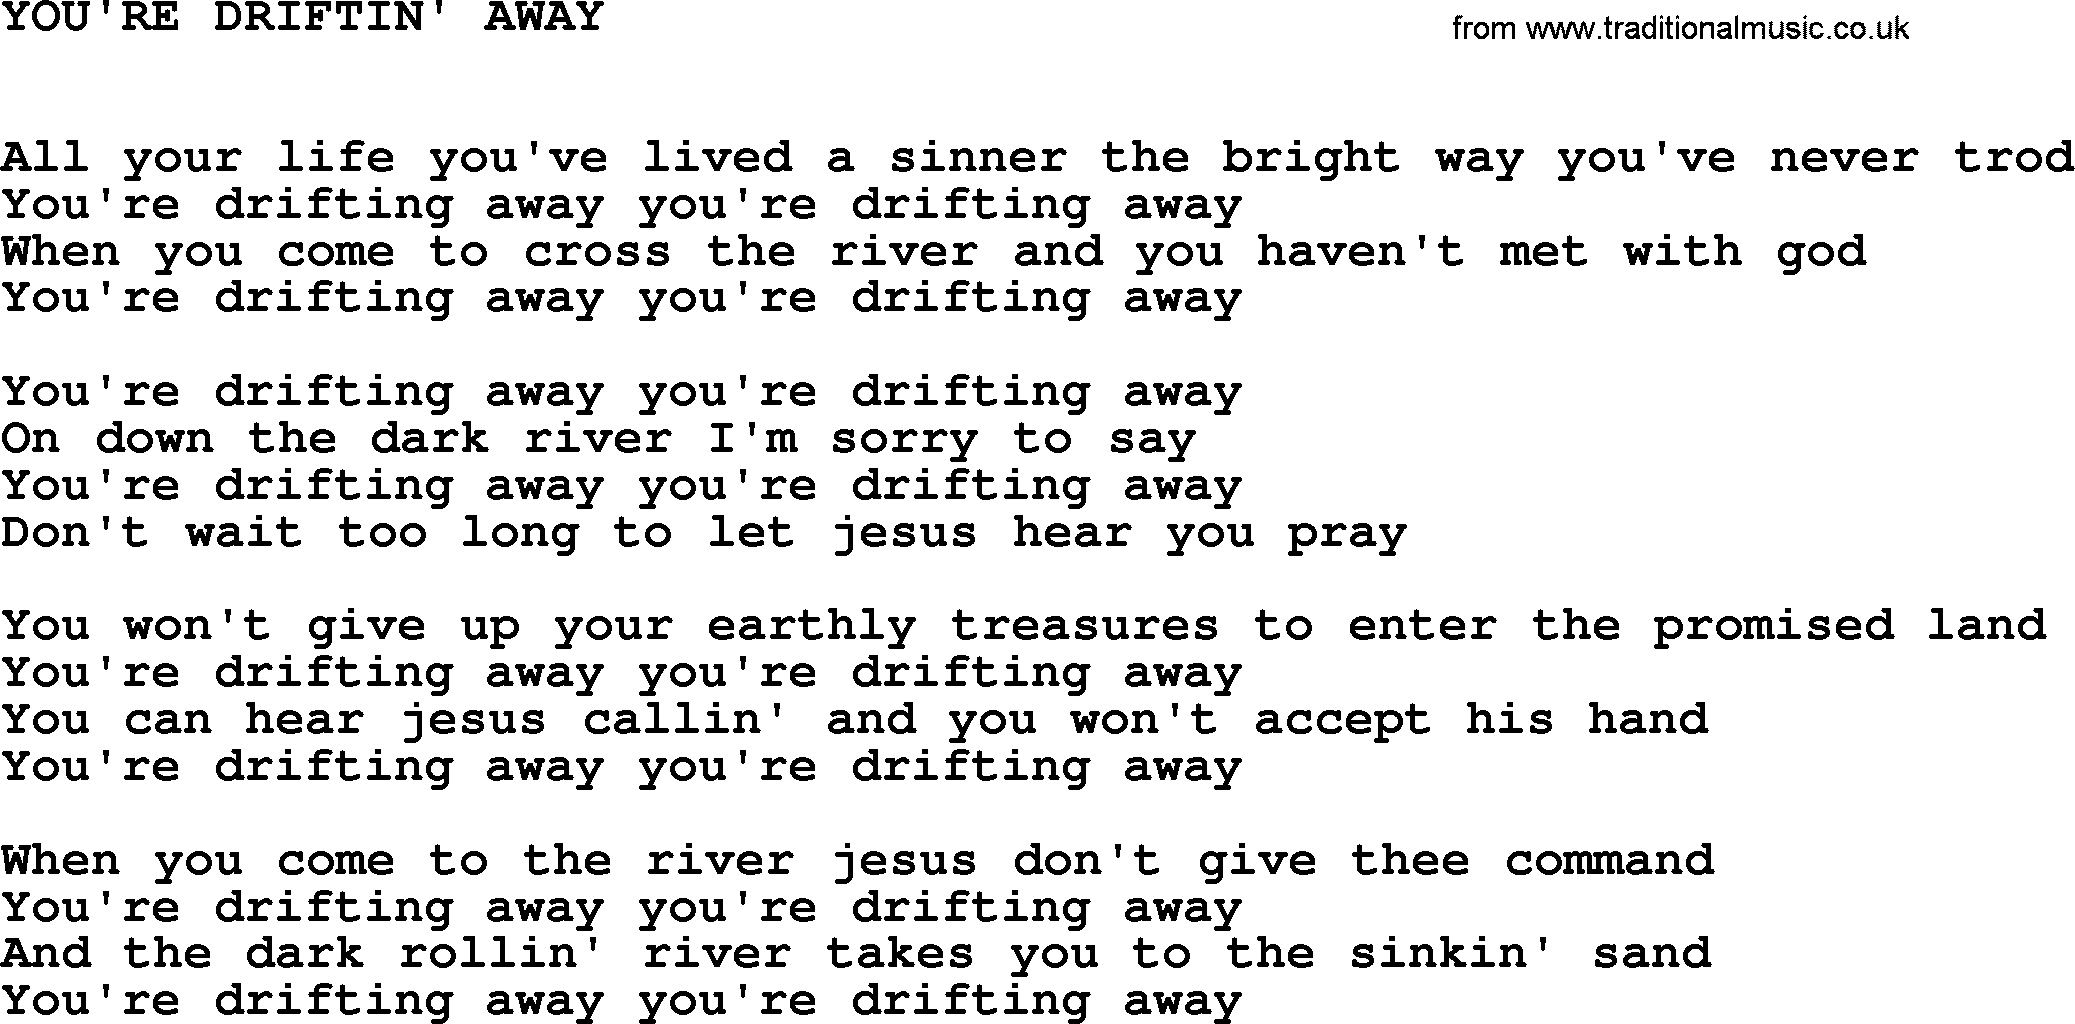 Johnny Cash song You're Driftin' Away.txt lyrics